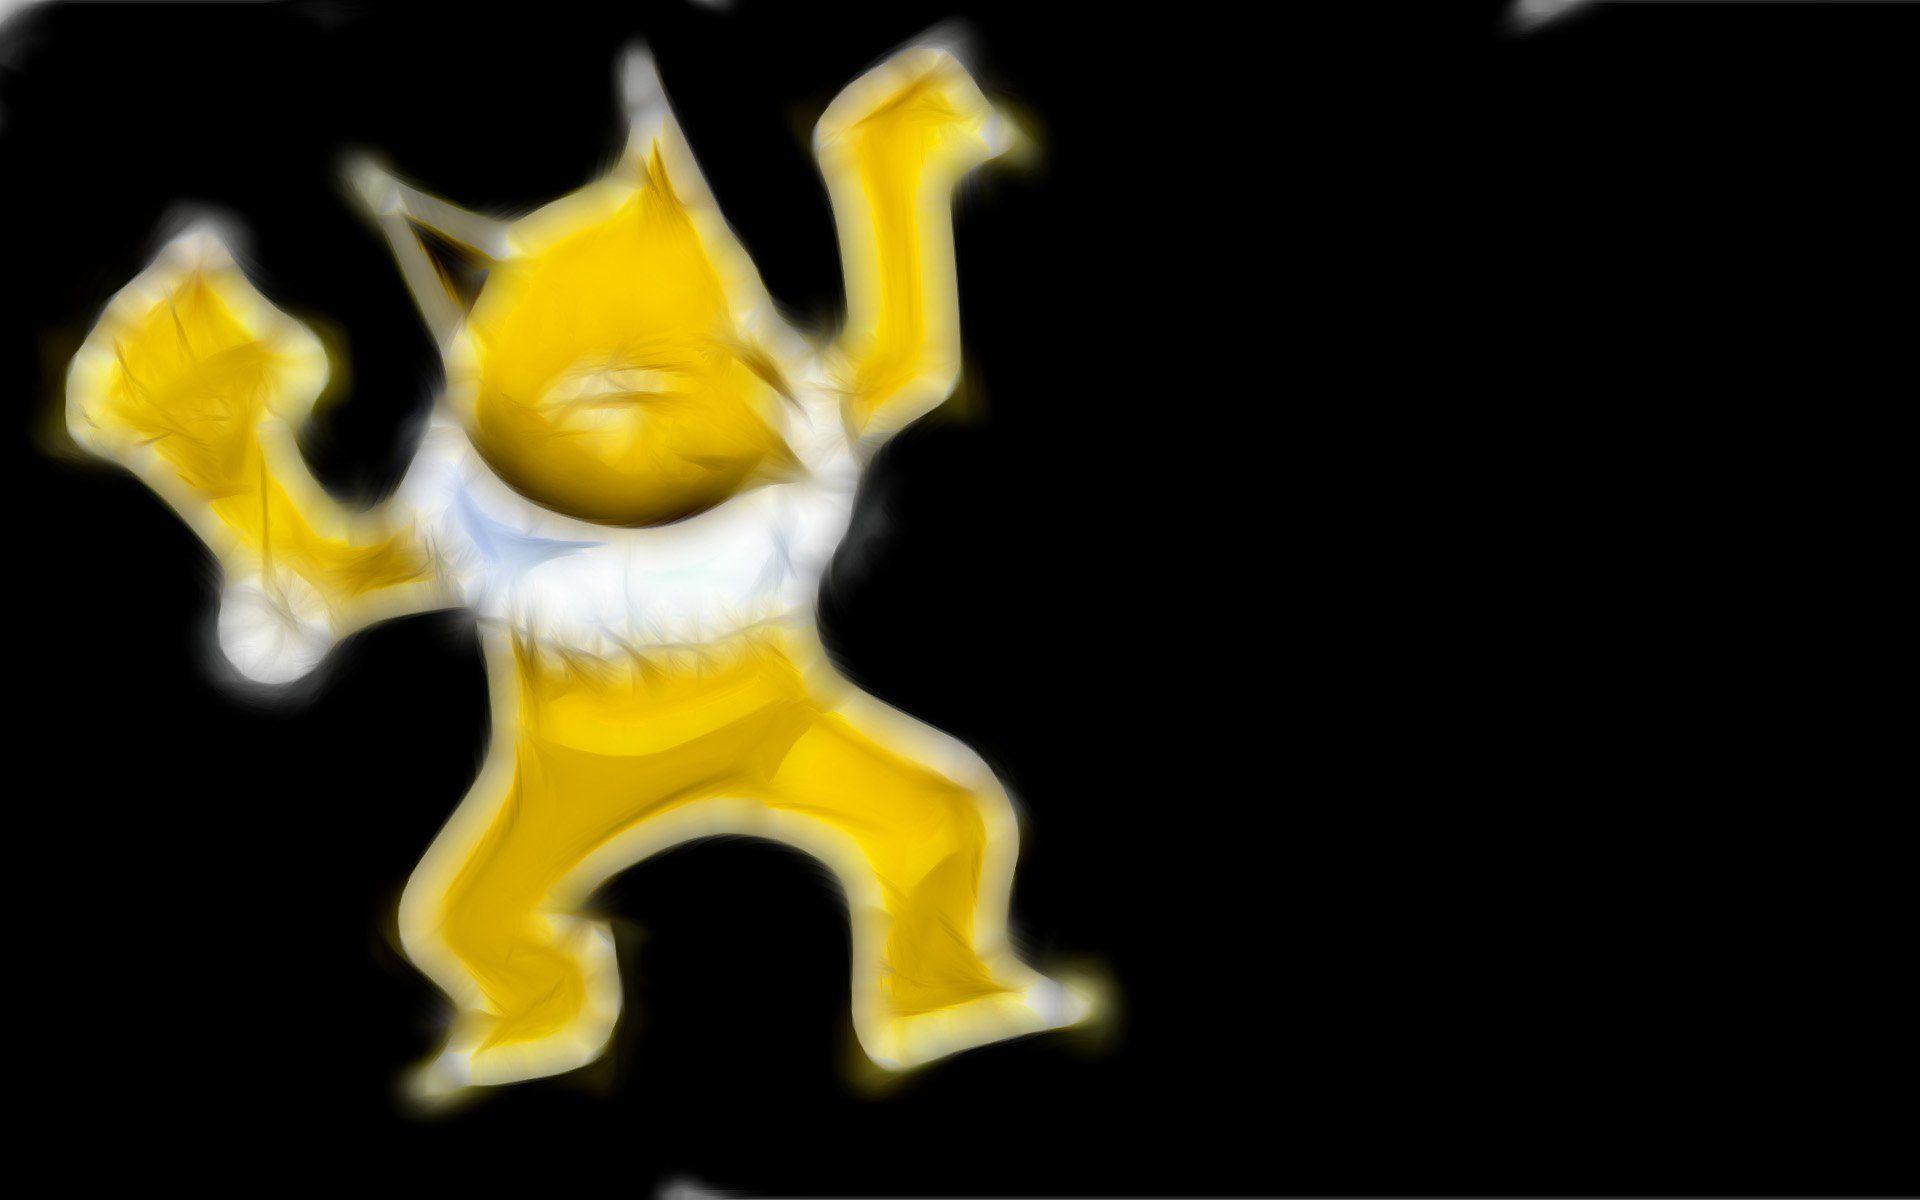 Hypno (Pokémon) HD Wallpaper and Background Image